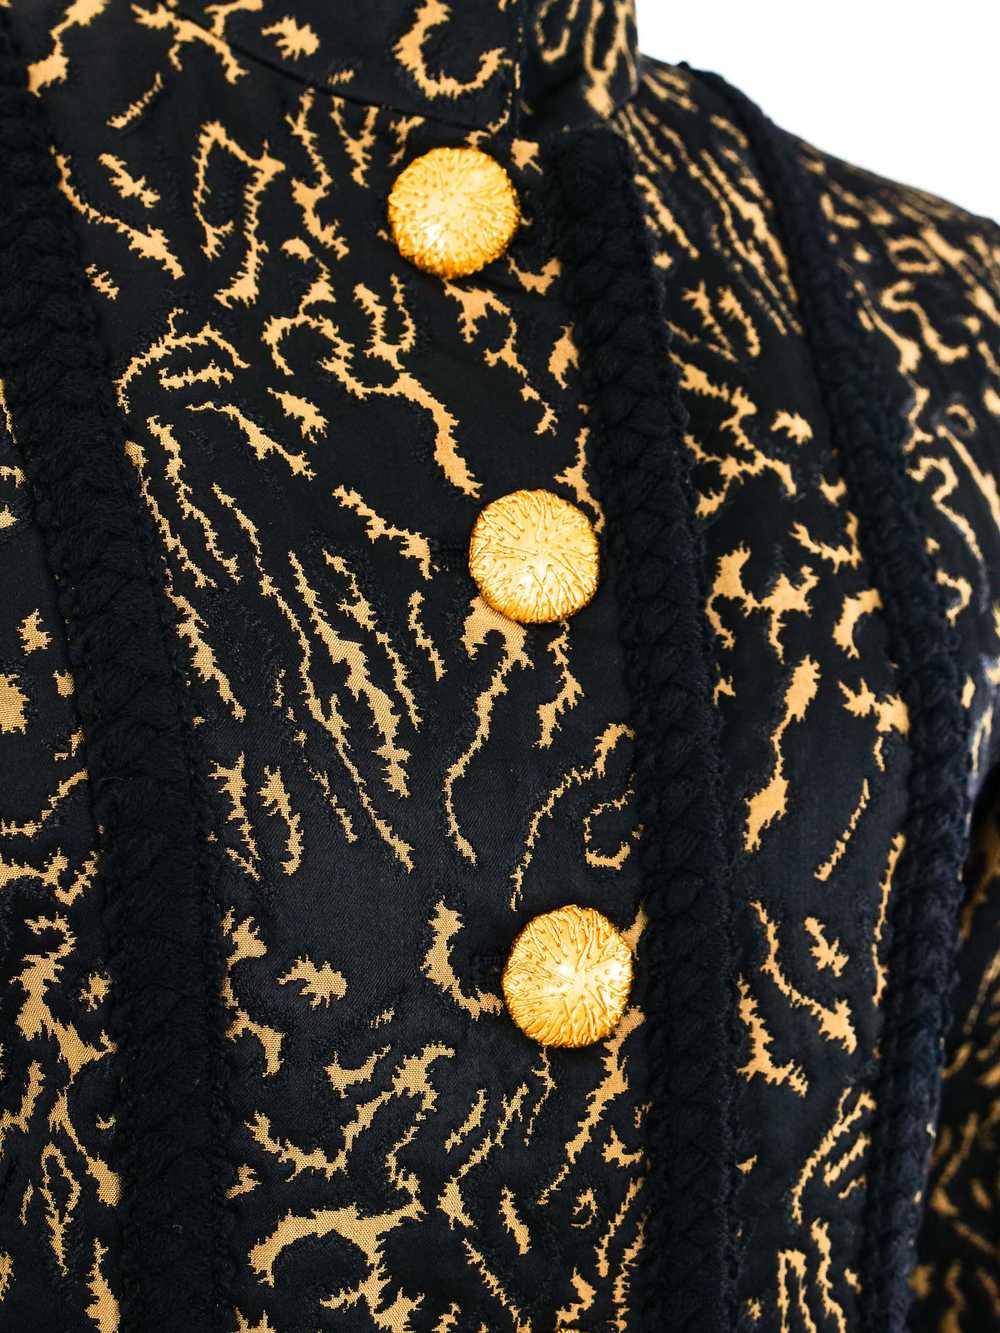 Yves Saint Laurent Brocade Skirt Suit - image 2